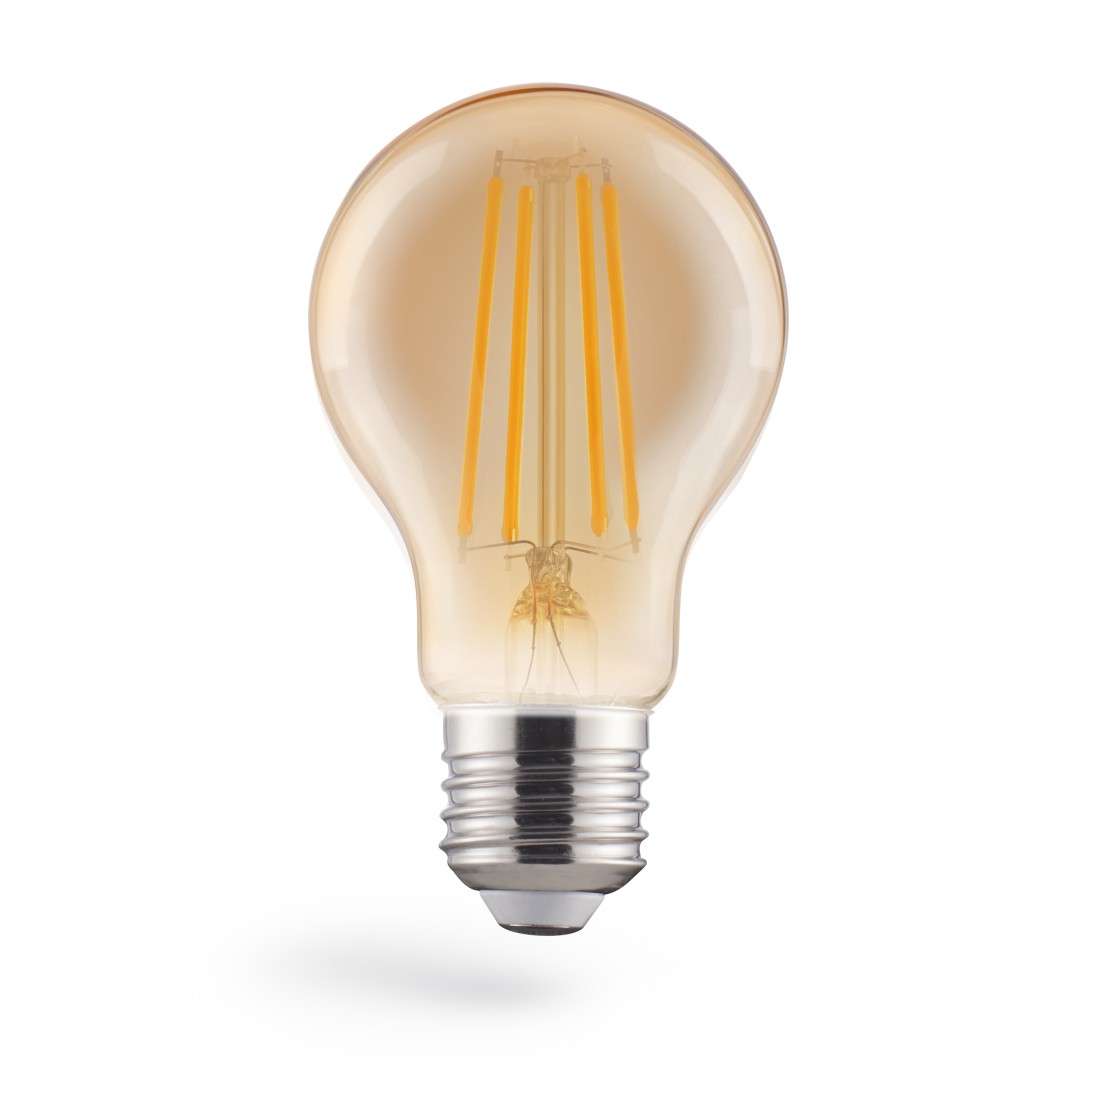 LED -Filament, E27, 600lm 8W, Vintage-Lampe Glühlampe, dimmbar, Warmweiß